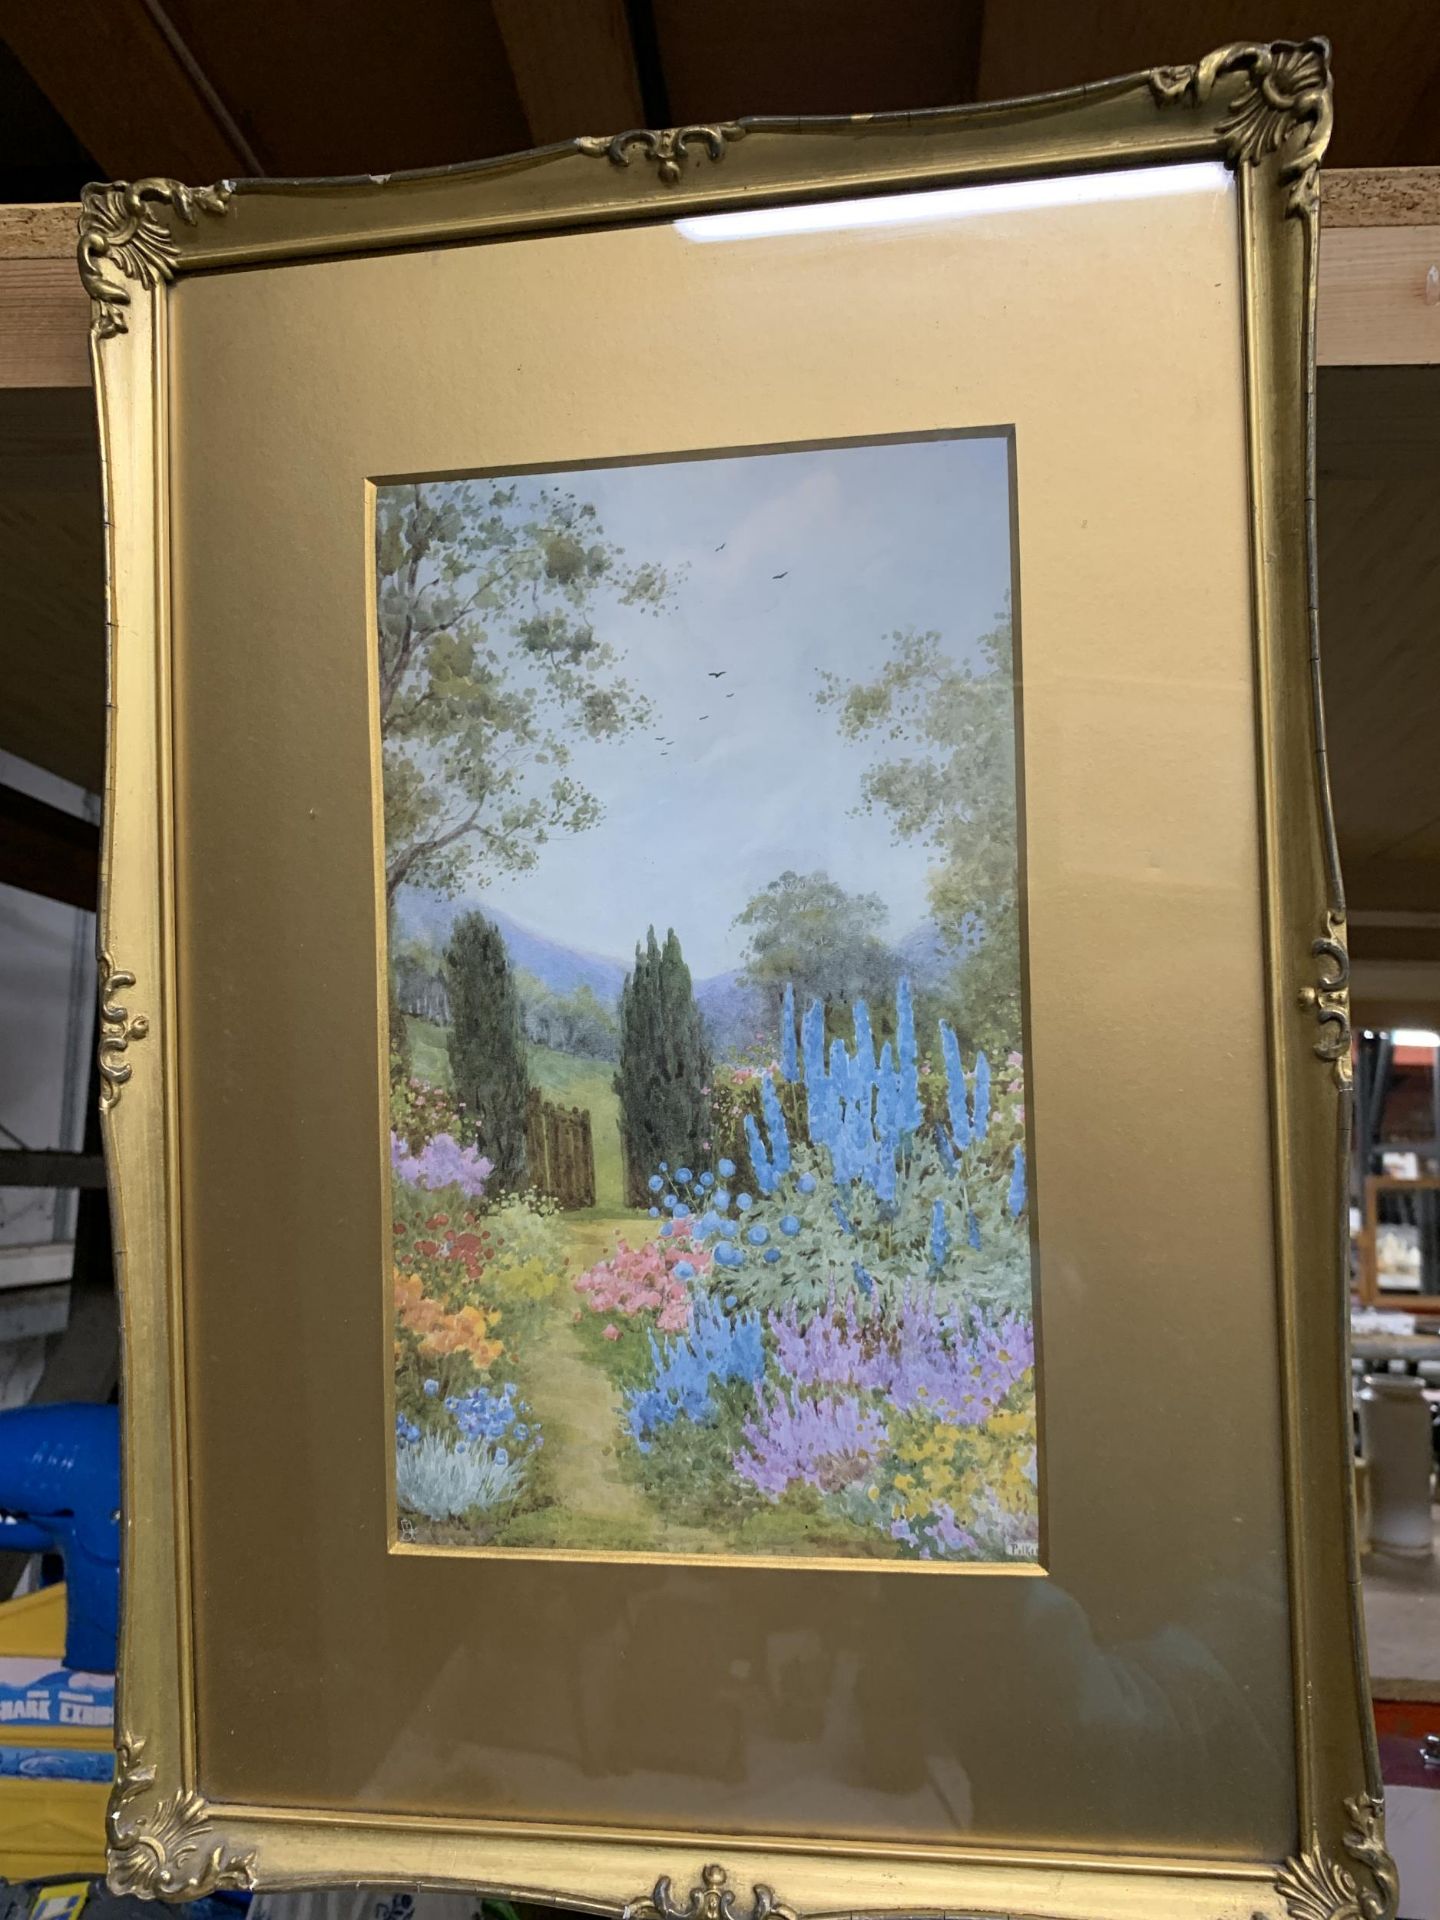 TWO GARDEN SCENE PRINTS BY THE ARTIST "PILKINGTON" IN GOLD ORNATE FRAMES - Image 3 of 3